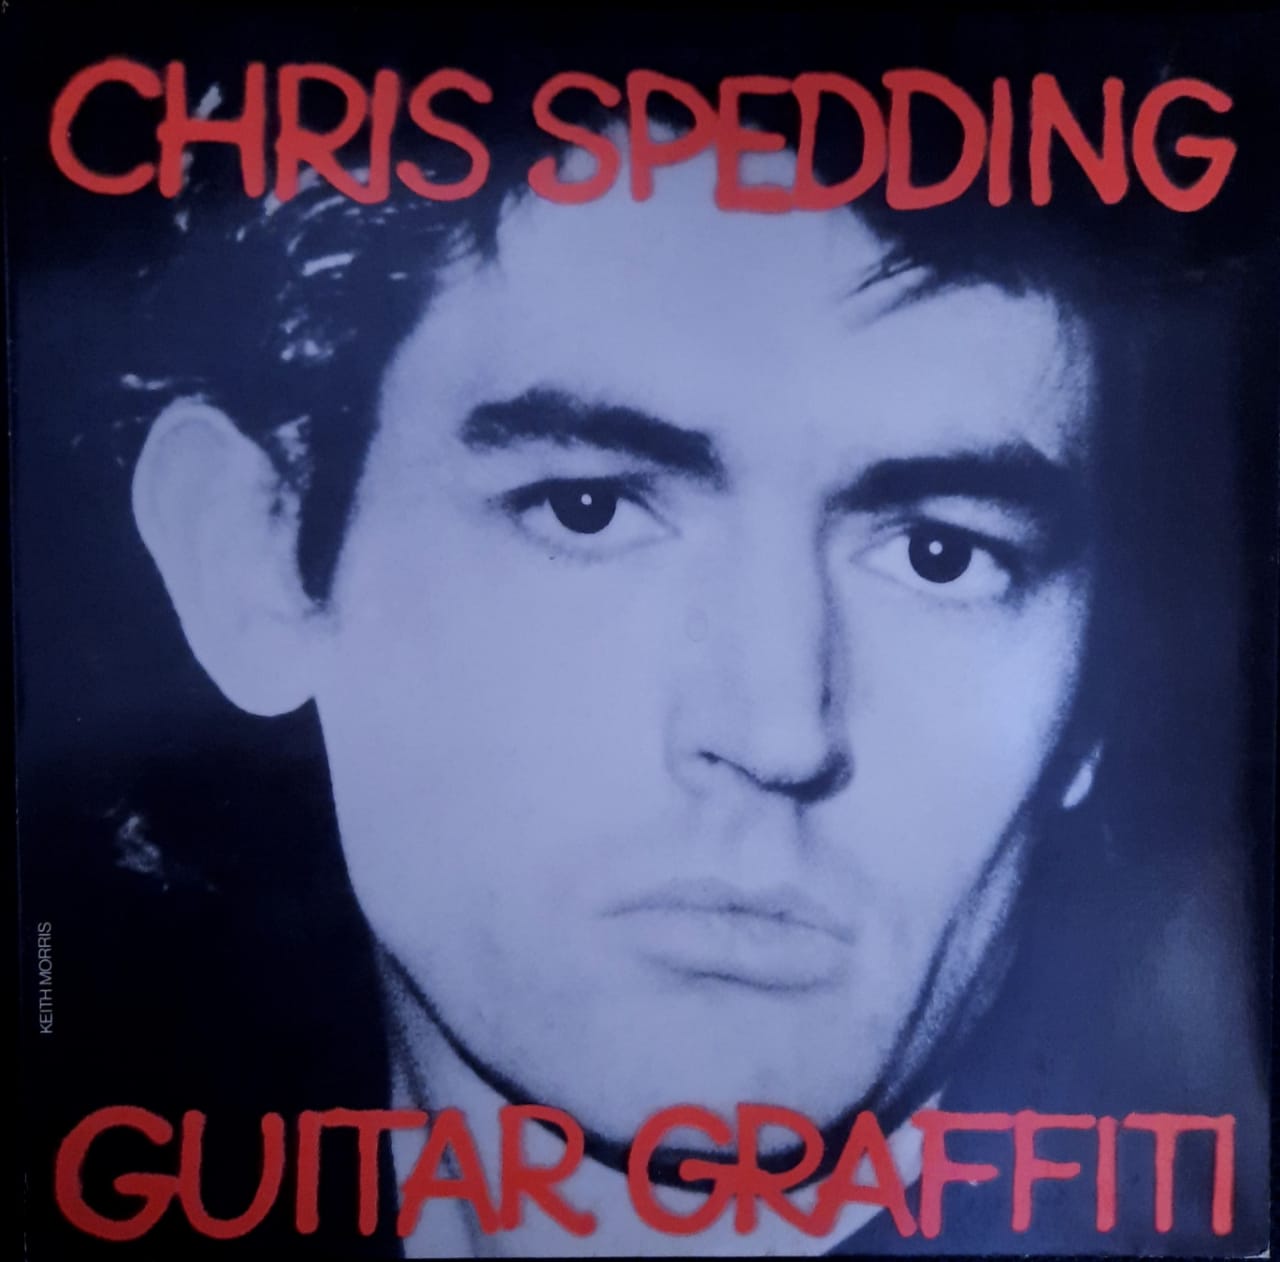 Chris Spedding – Guitar Graffiti (LP, Alemania, 1979)